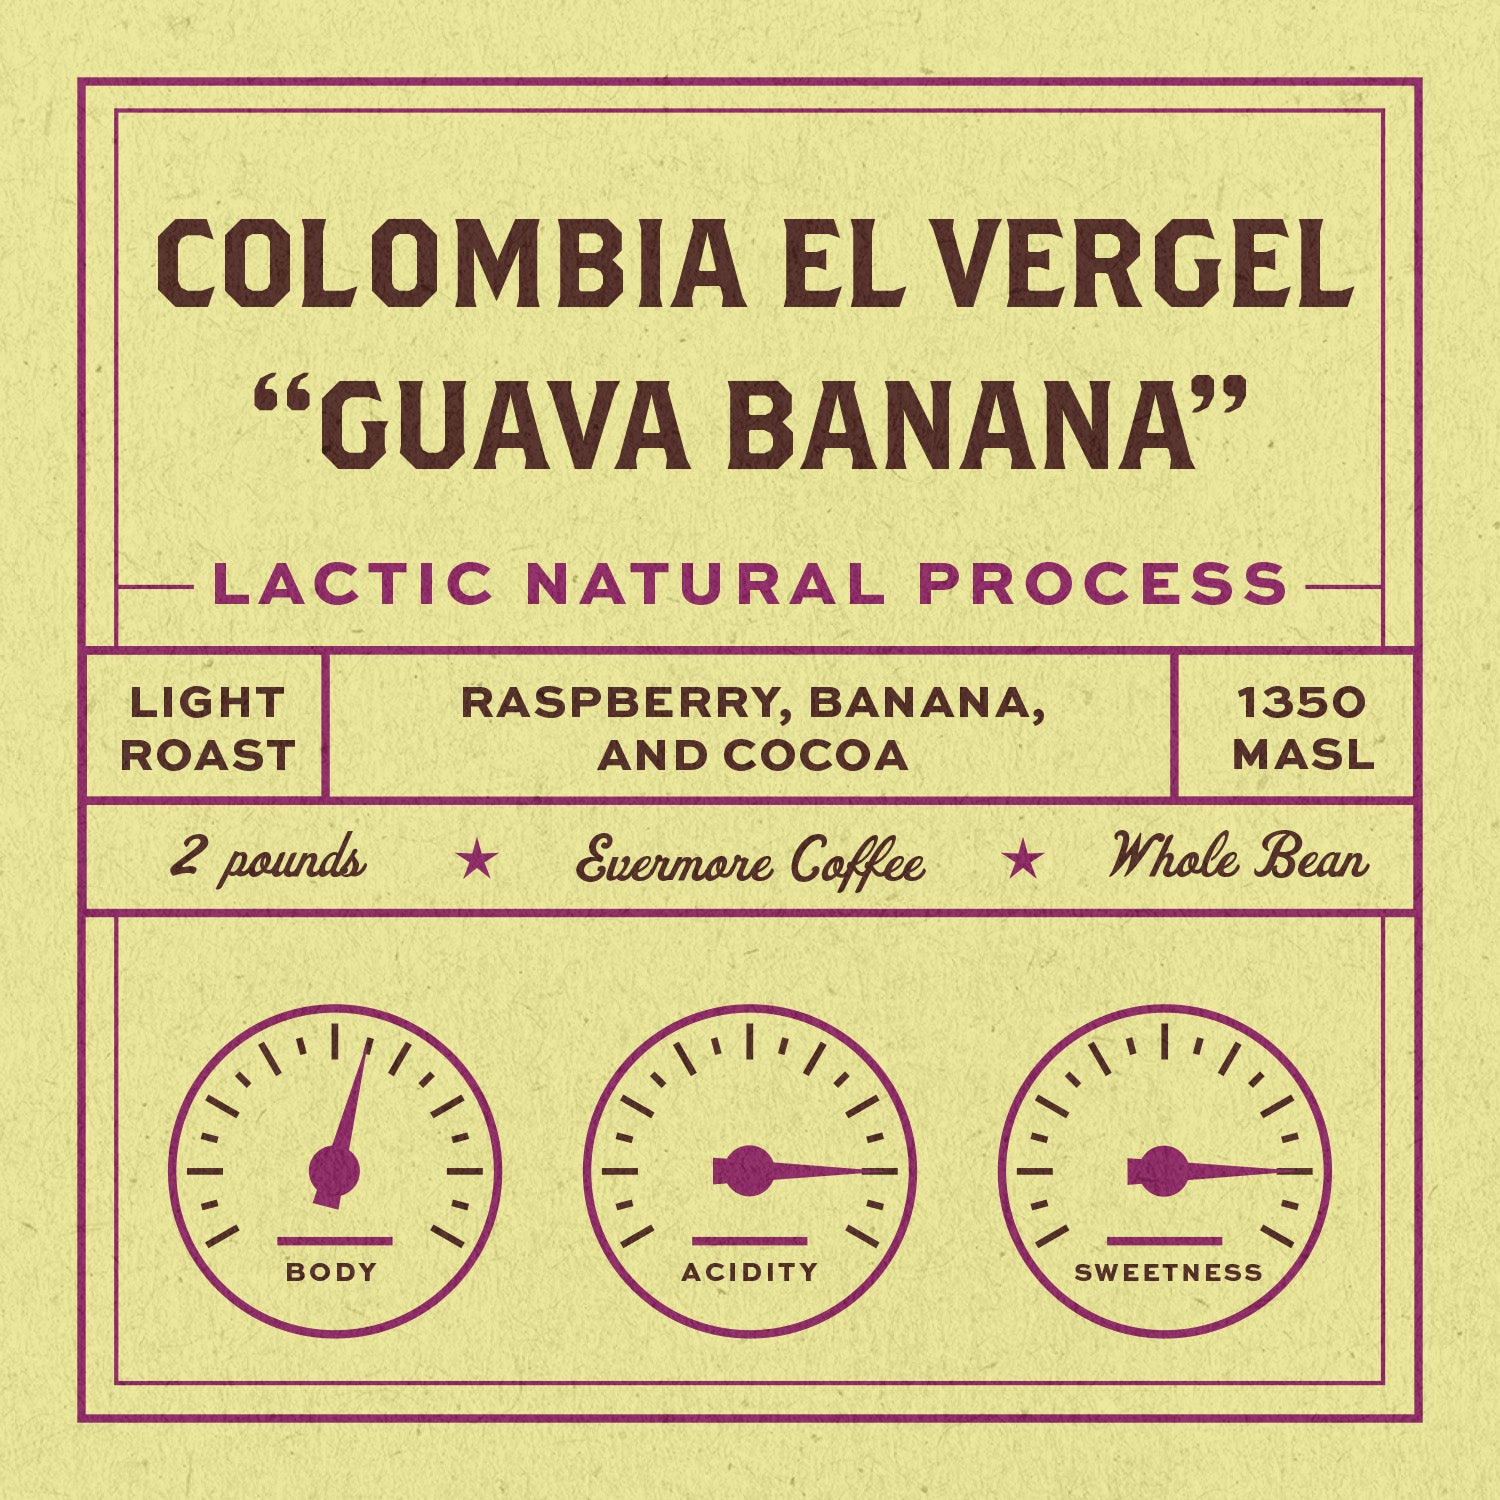 Colombia El Vergel 